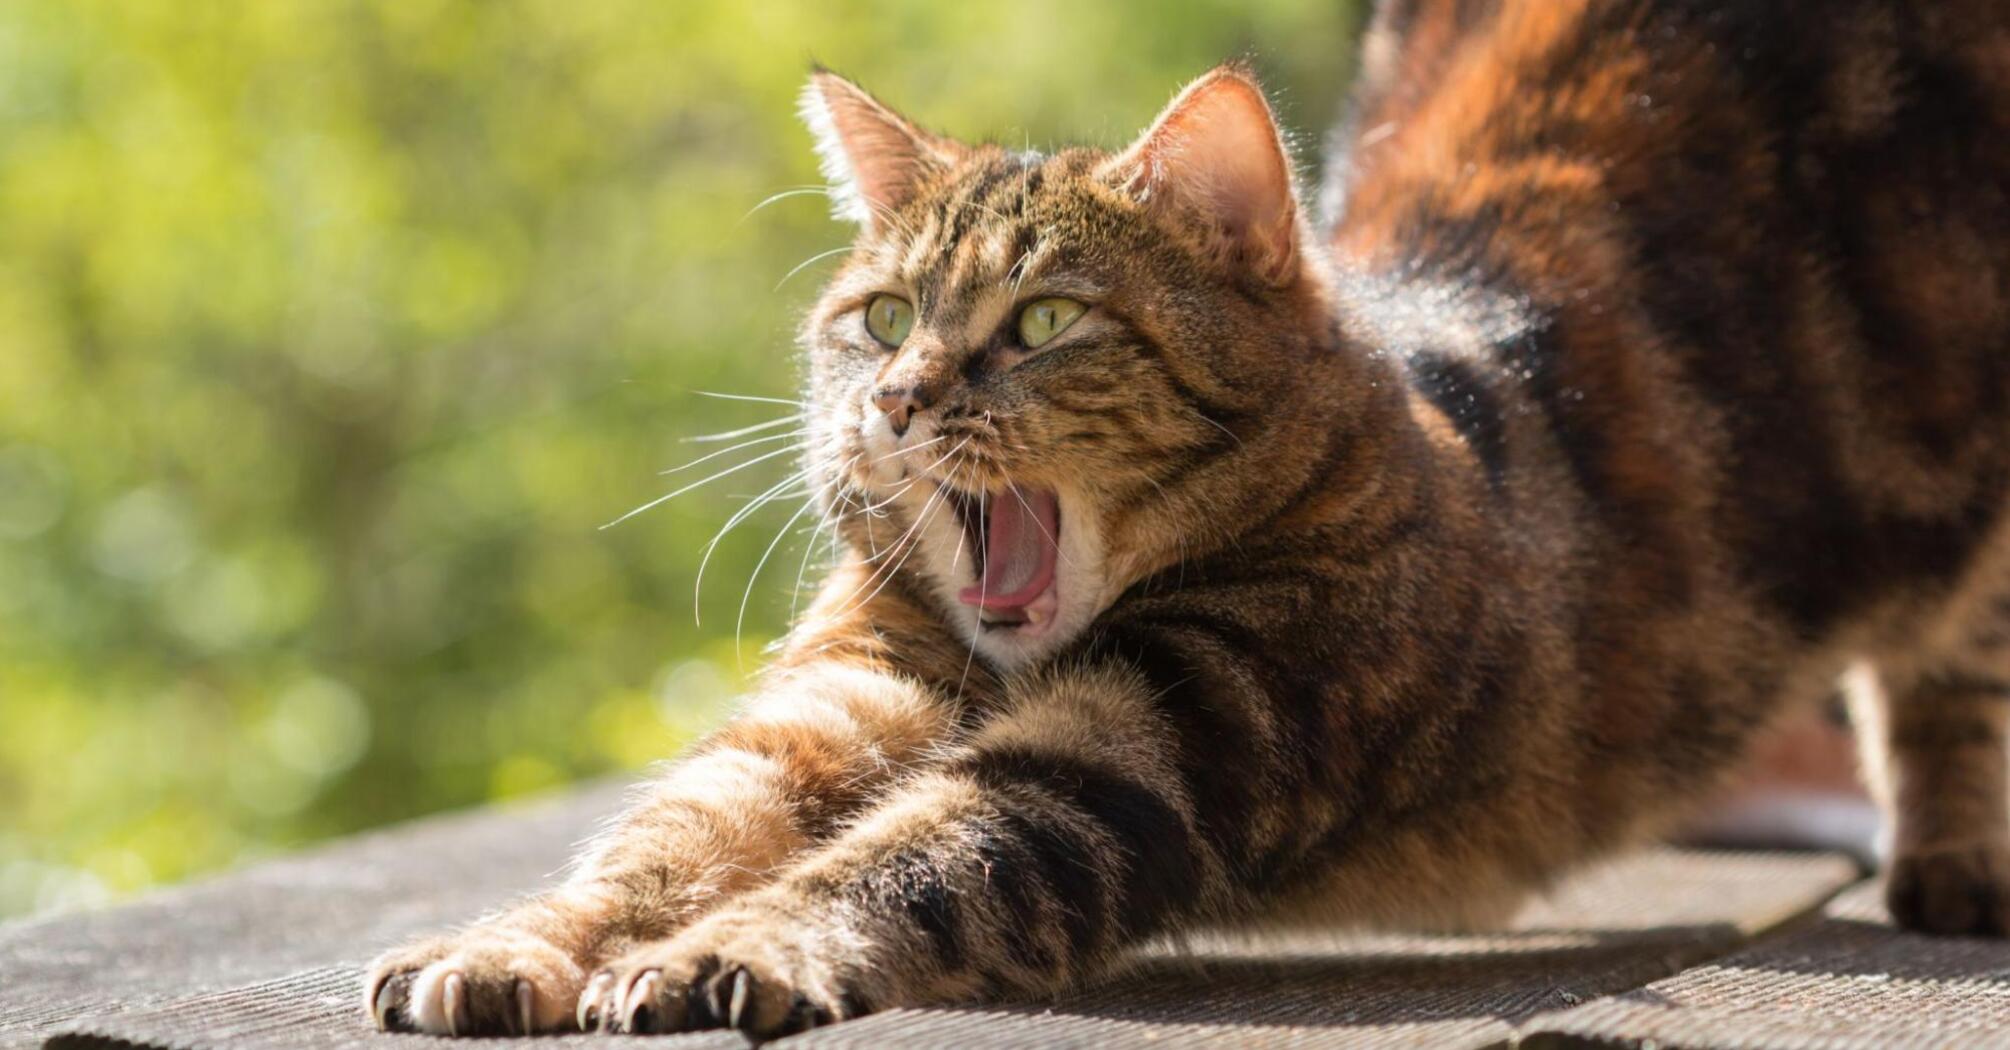 Cat yawning on the street